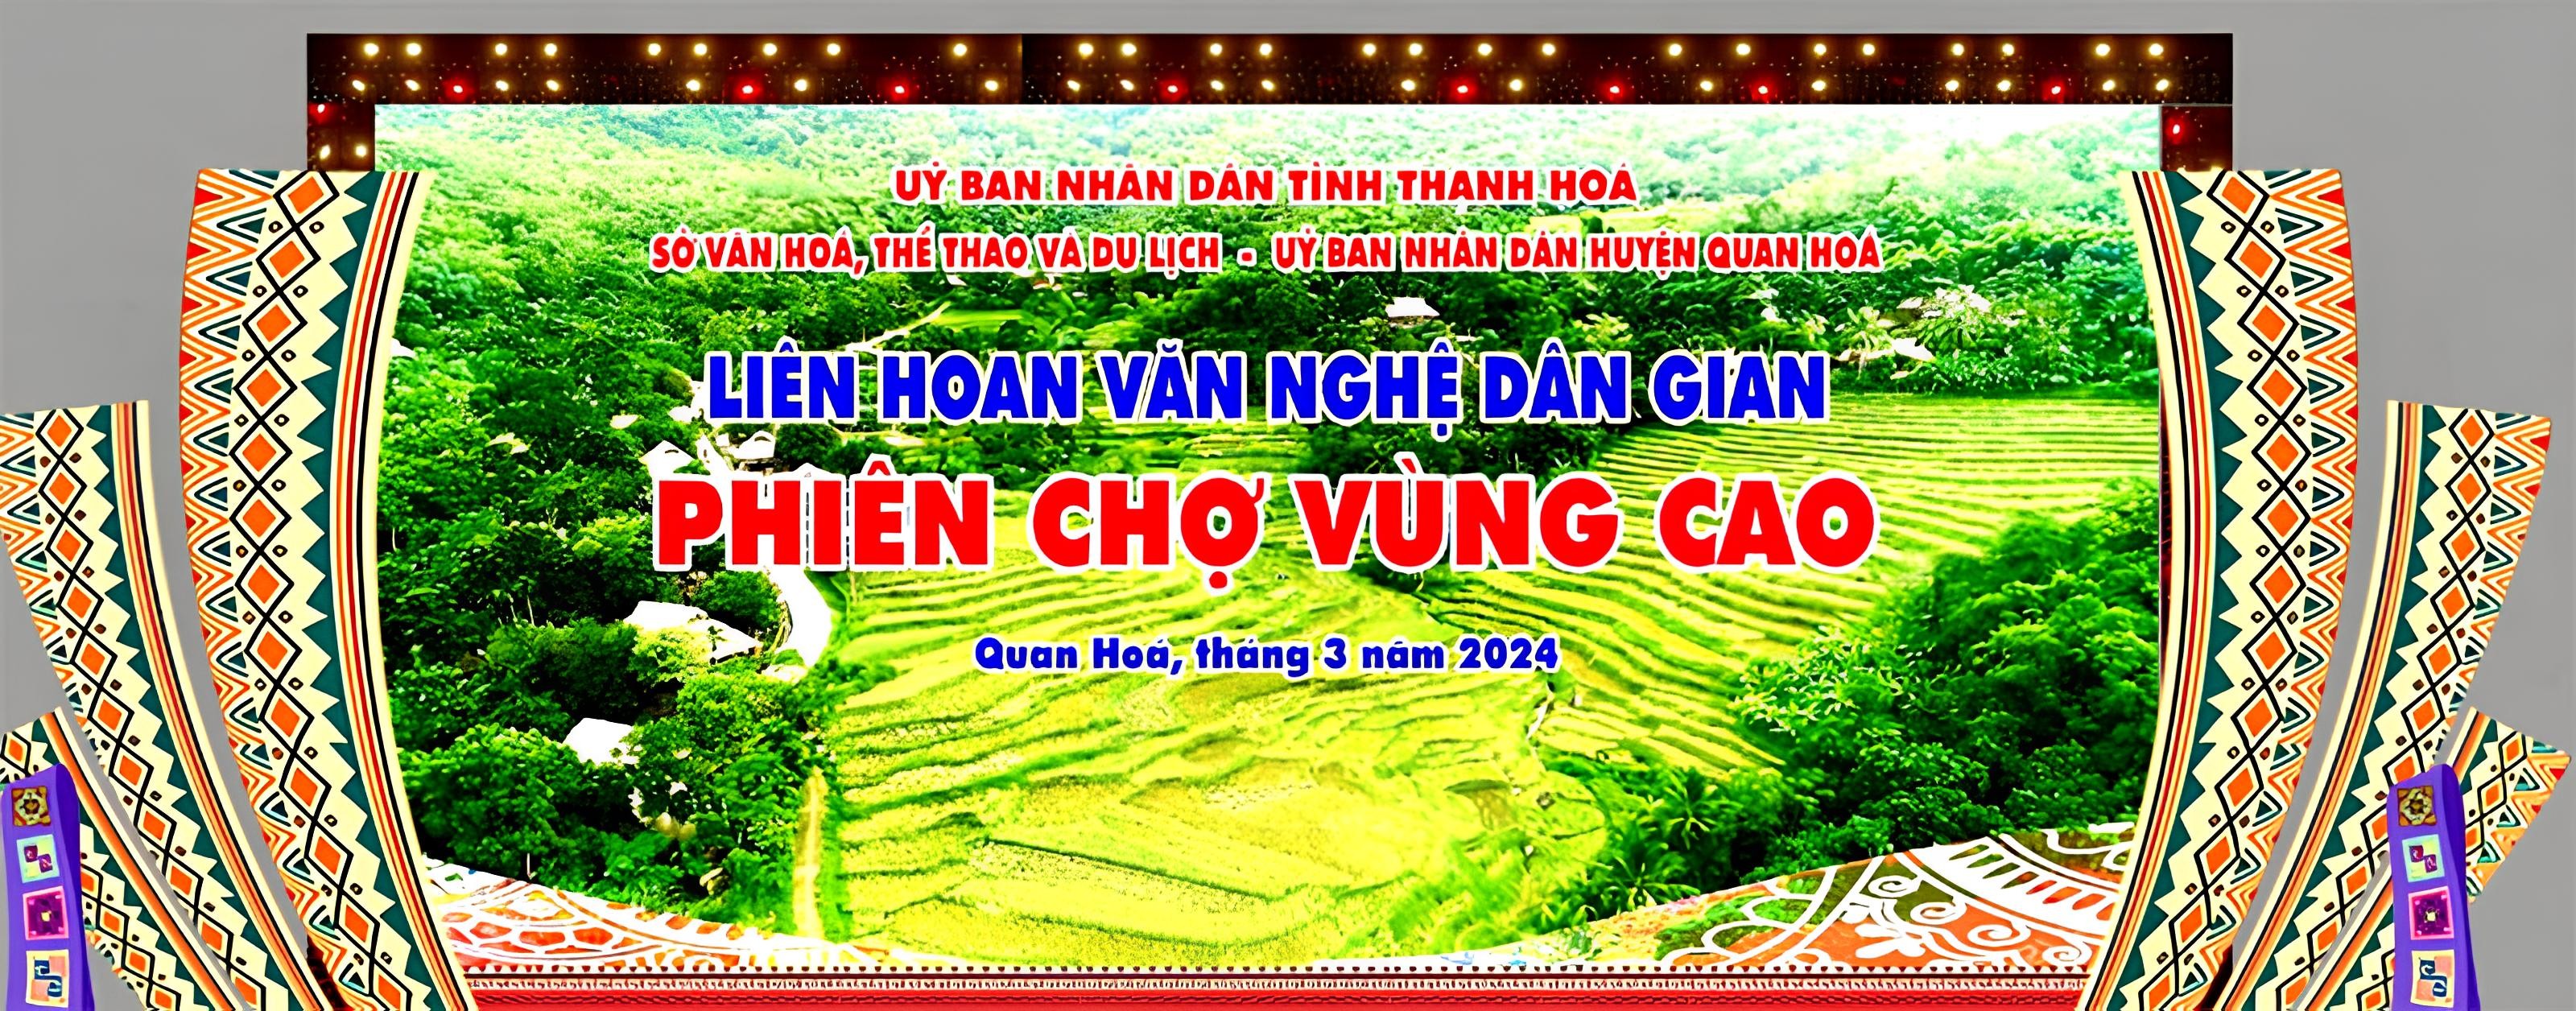 huong-sac-vung-cao-1710994086.jpg